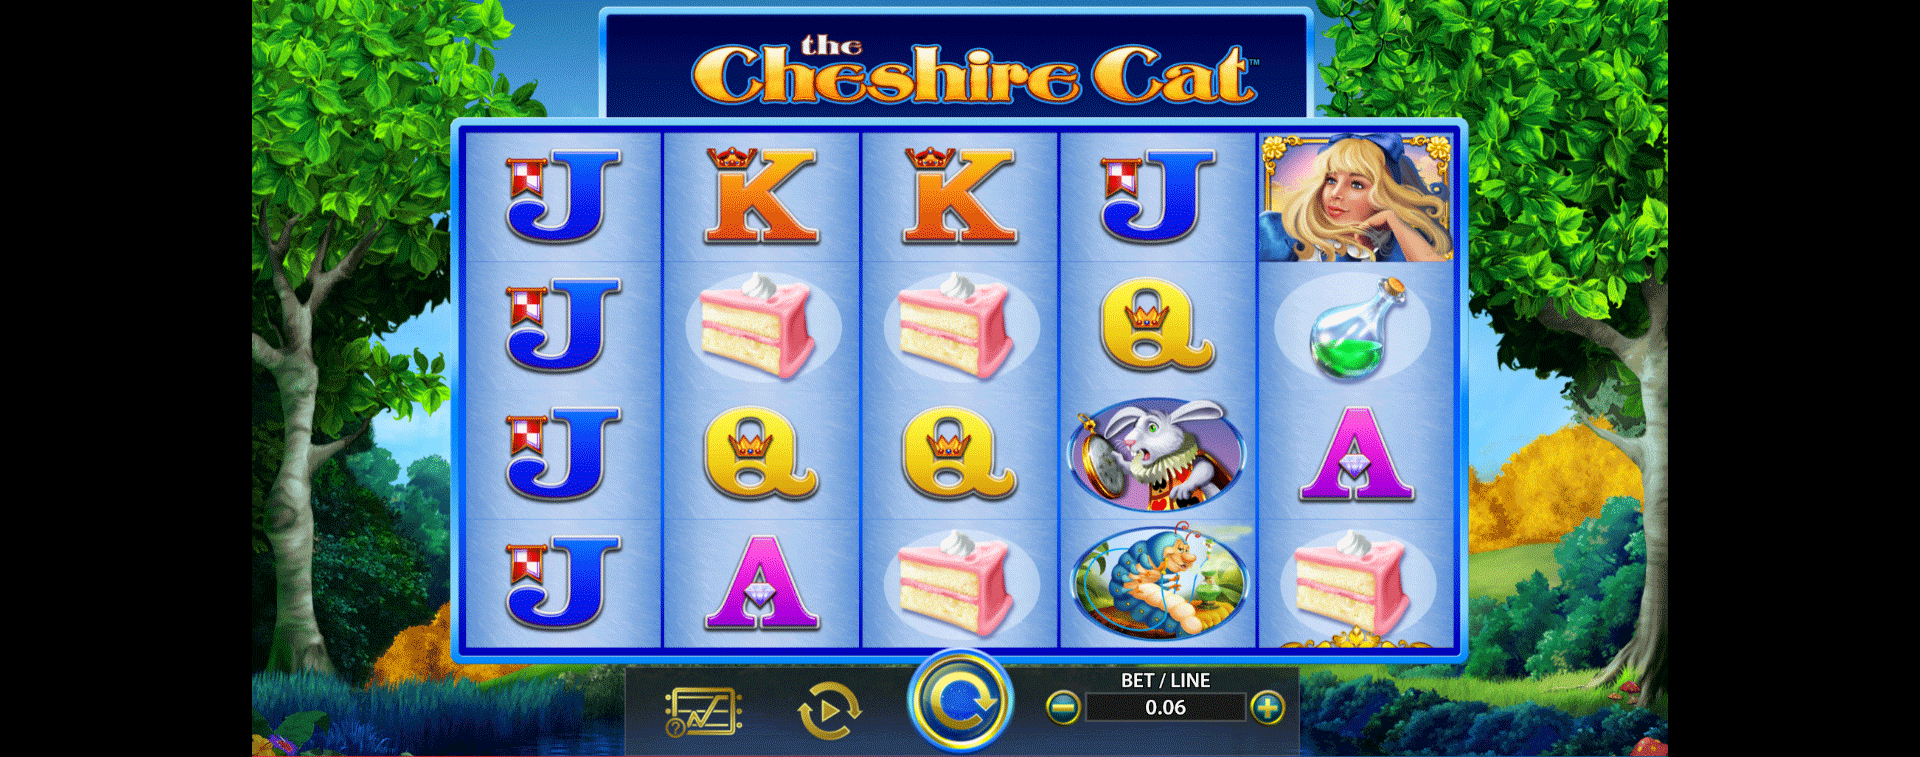 griglia slot online the cheshire cat